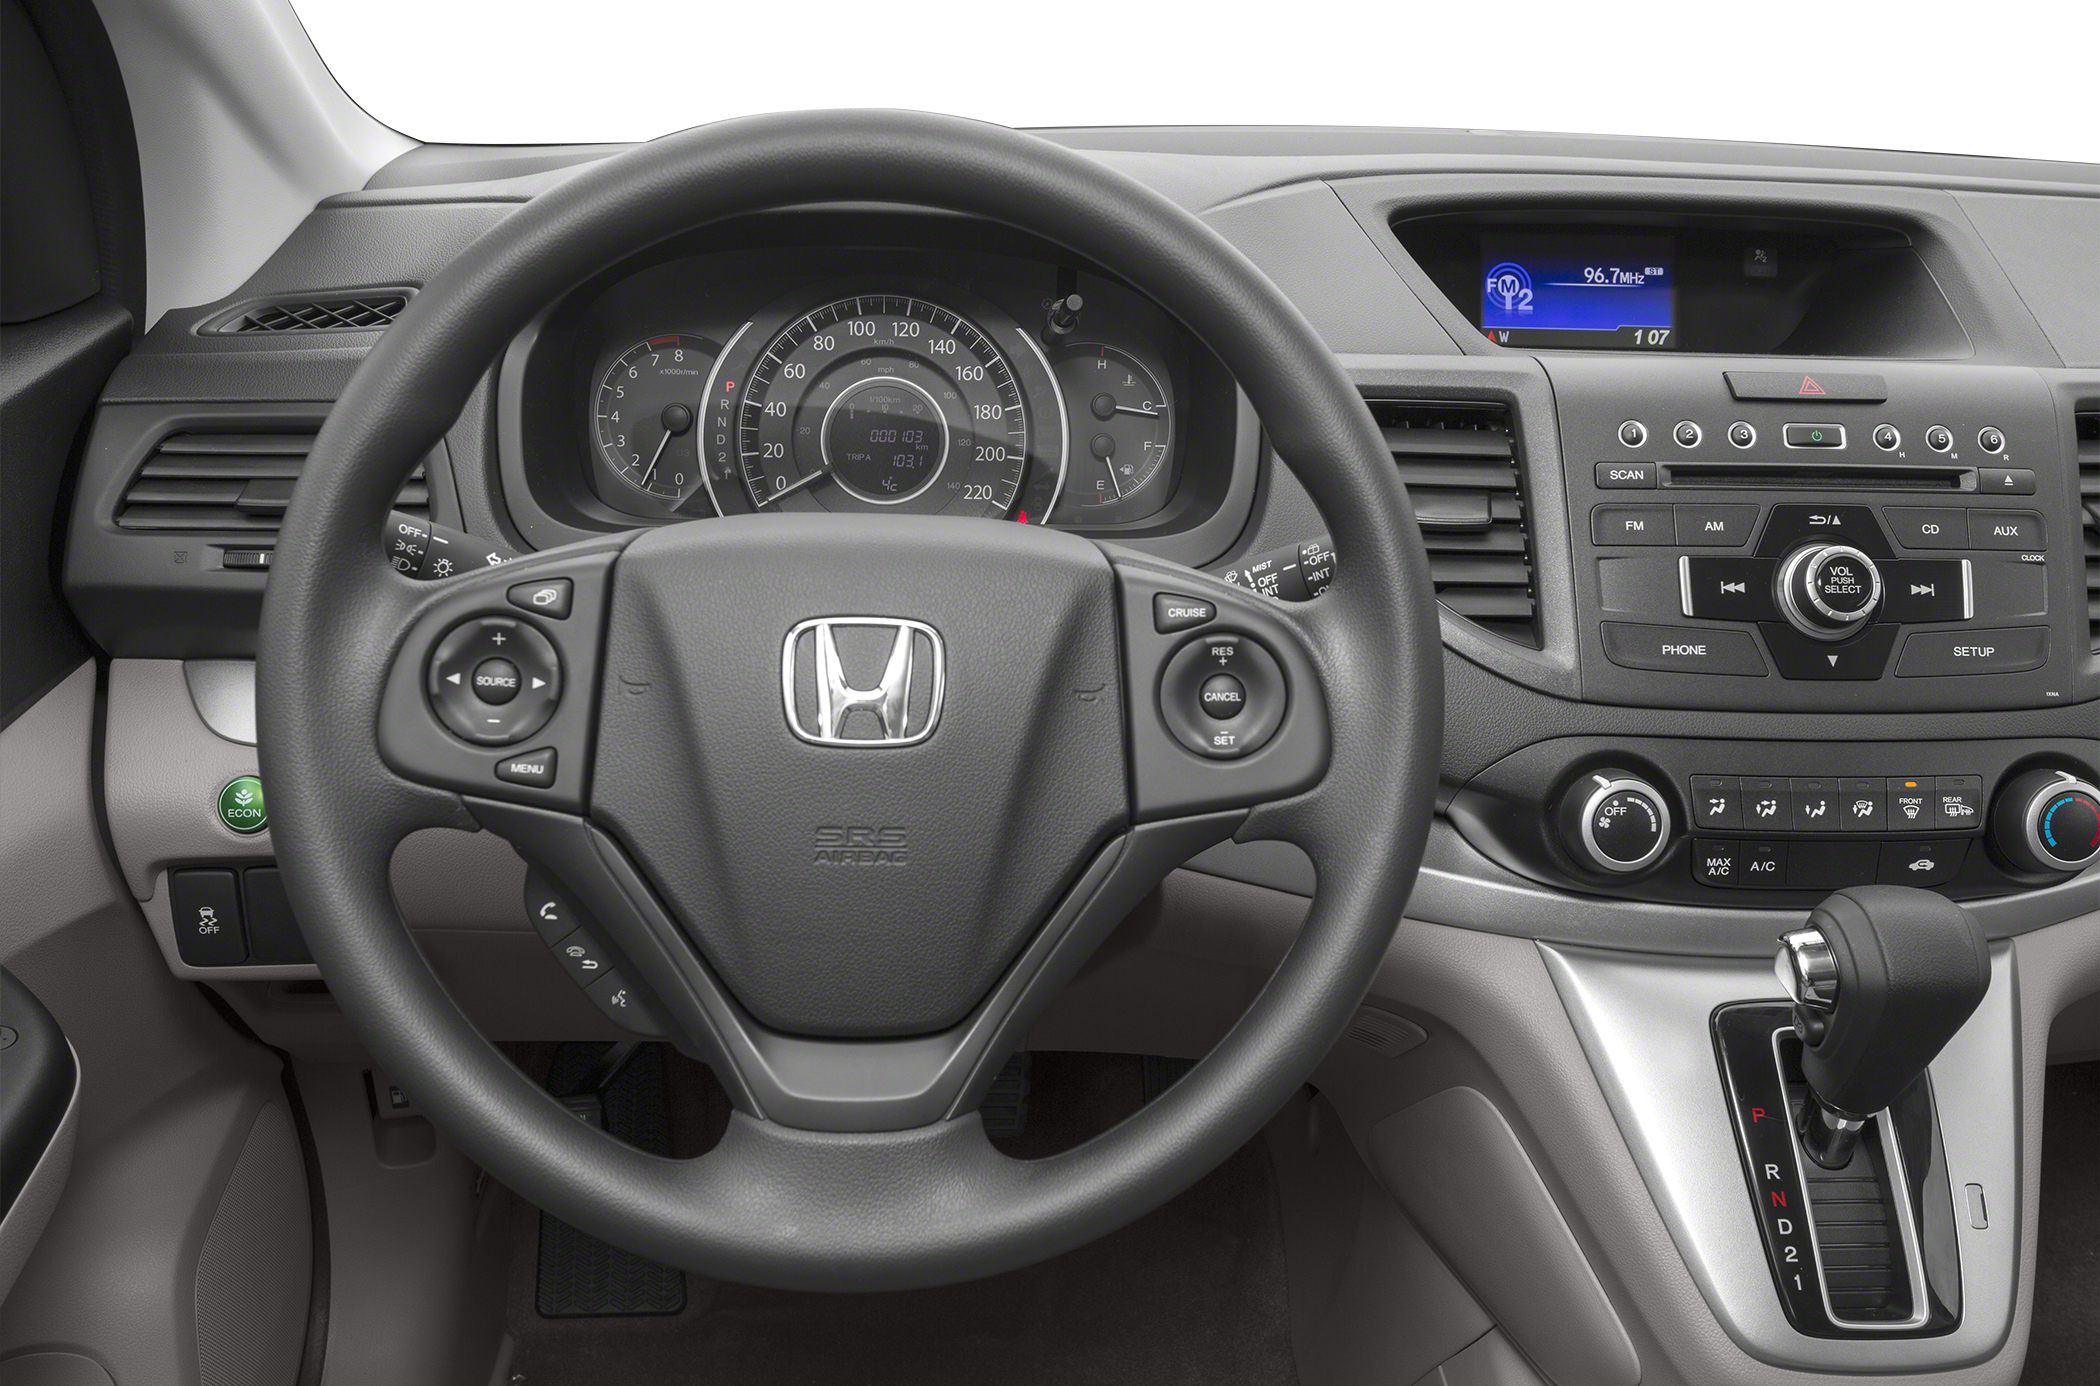 Honda cr панель. Honda CRV 2014 салон. Honda CR-V 2014. Honda CR-V 2014 салон. Honda CR-V 2014 интерьер.